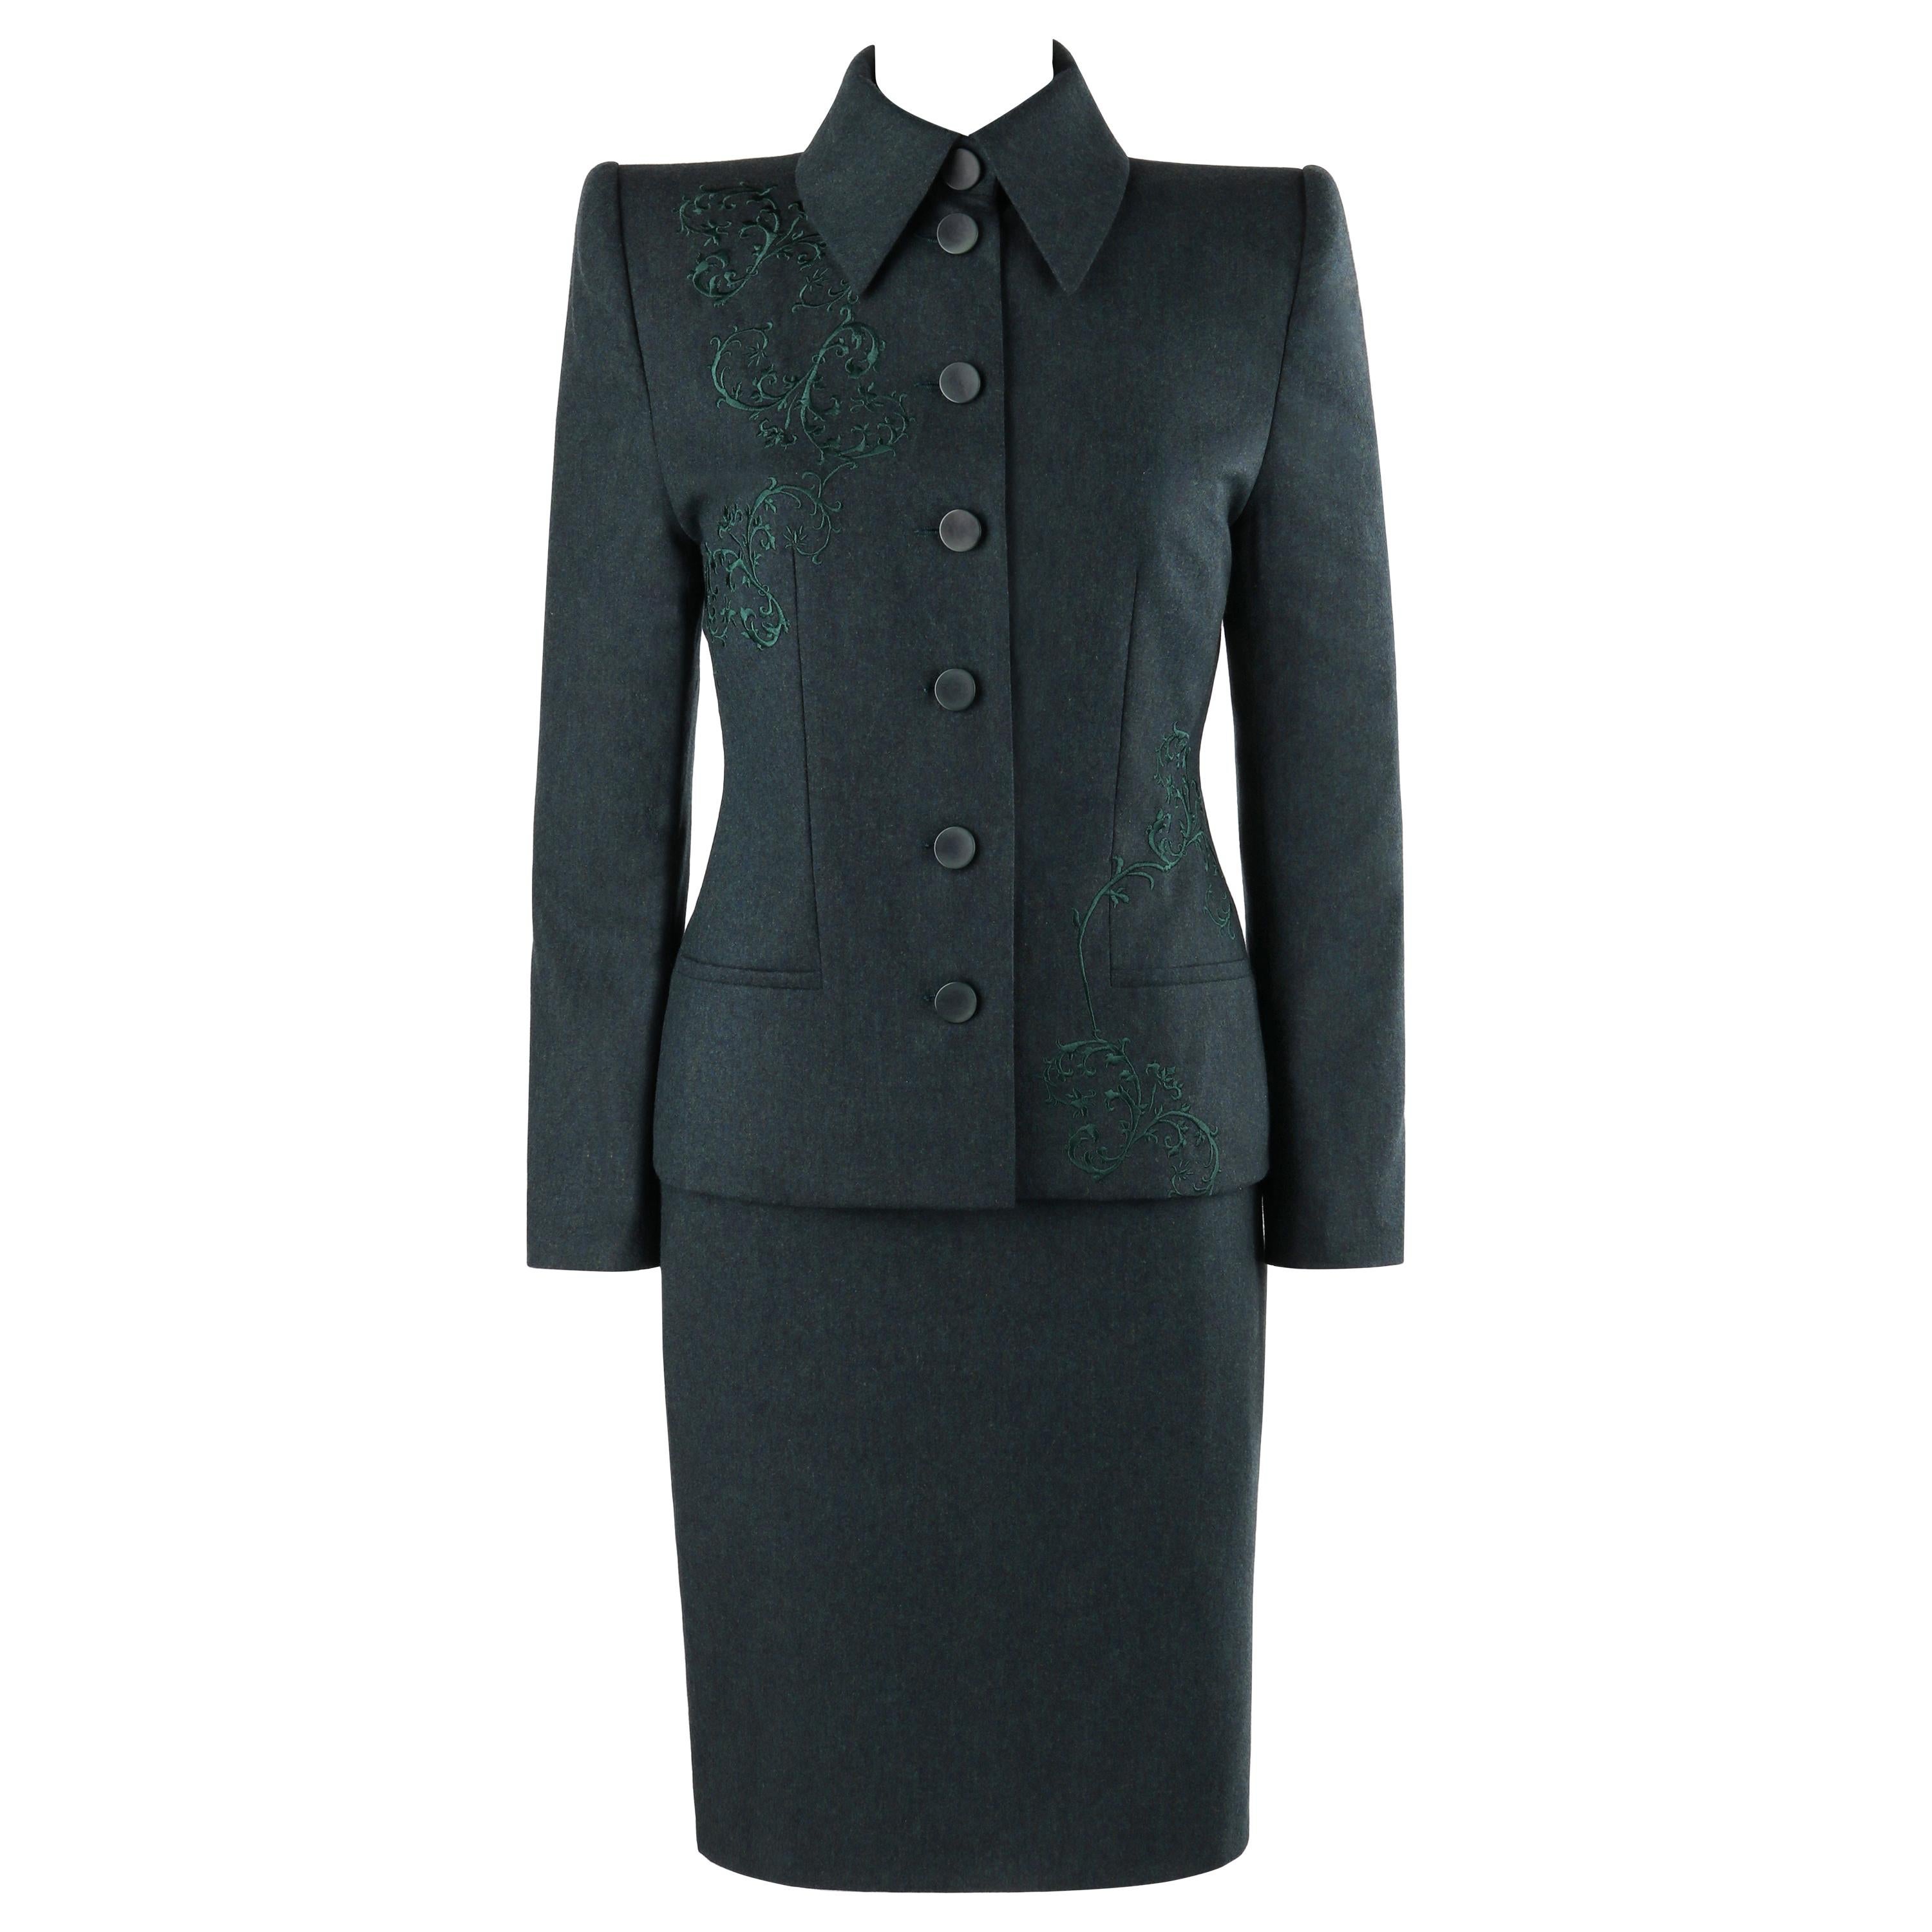 GIVENCHY Couture A/W 1998 ALEXANDER McQUEEN Dark Green Tailored Blazer Skirt Set